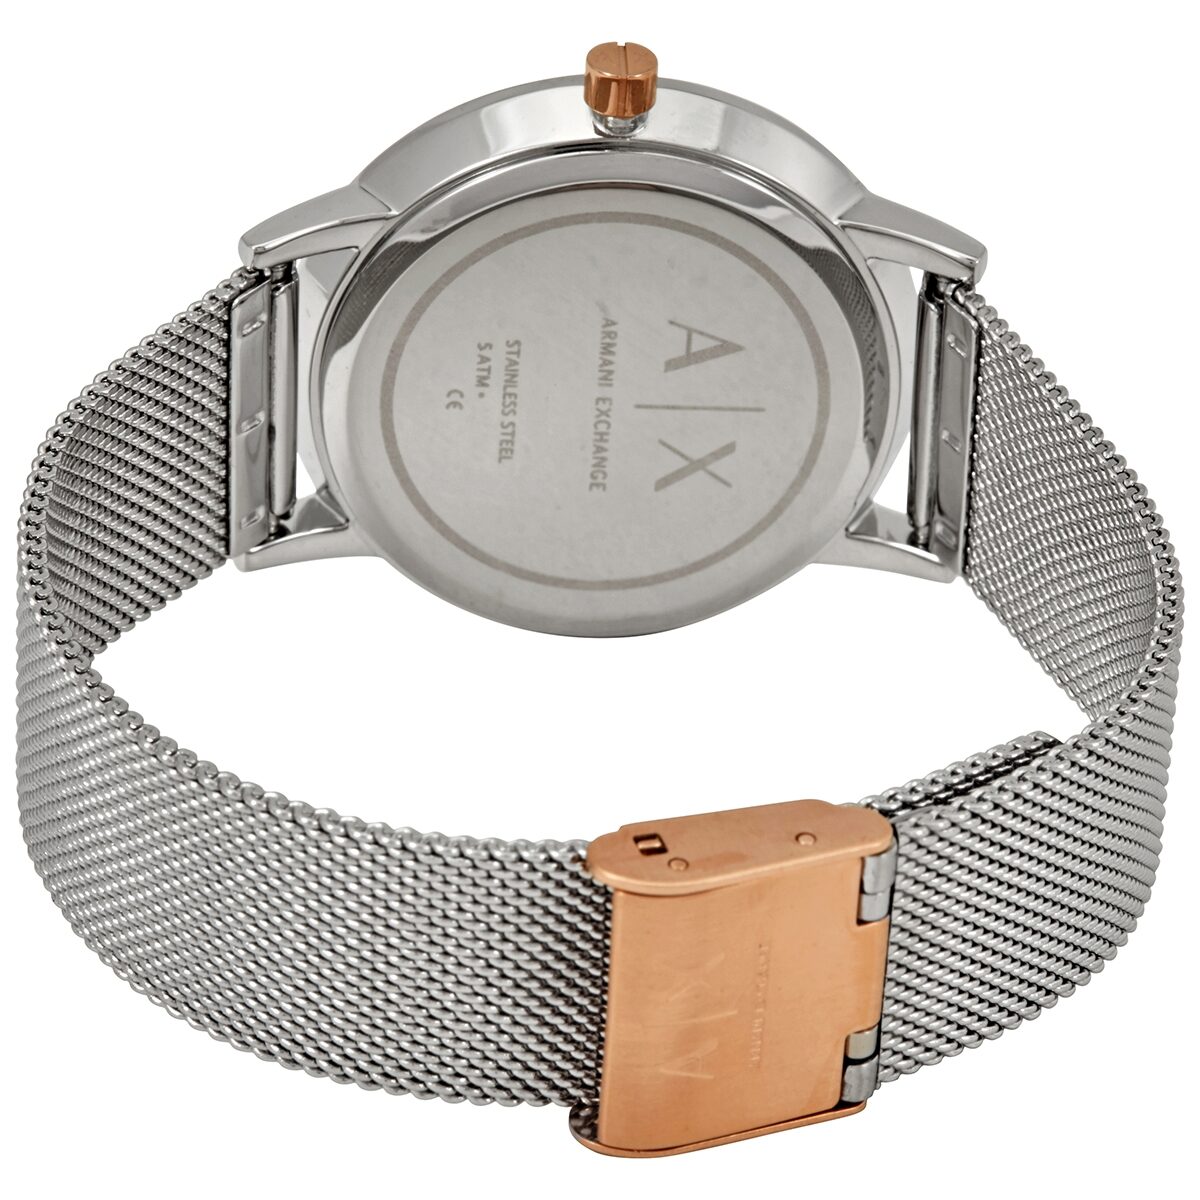 Armani Exchange Quartz Silver Dial Ladies Watch AX5537 - BigDaddy Watches #3